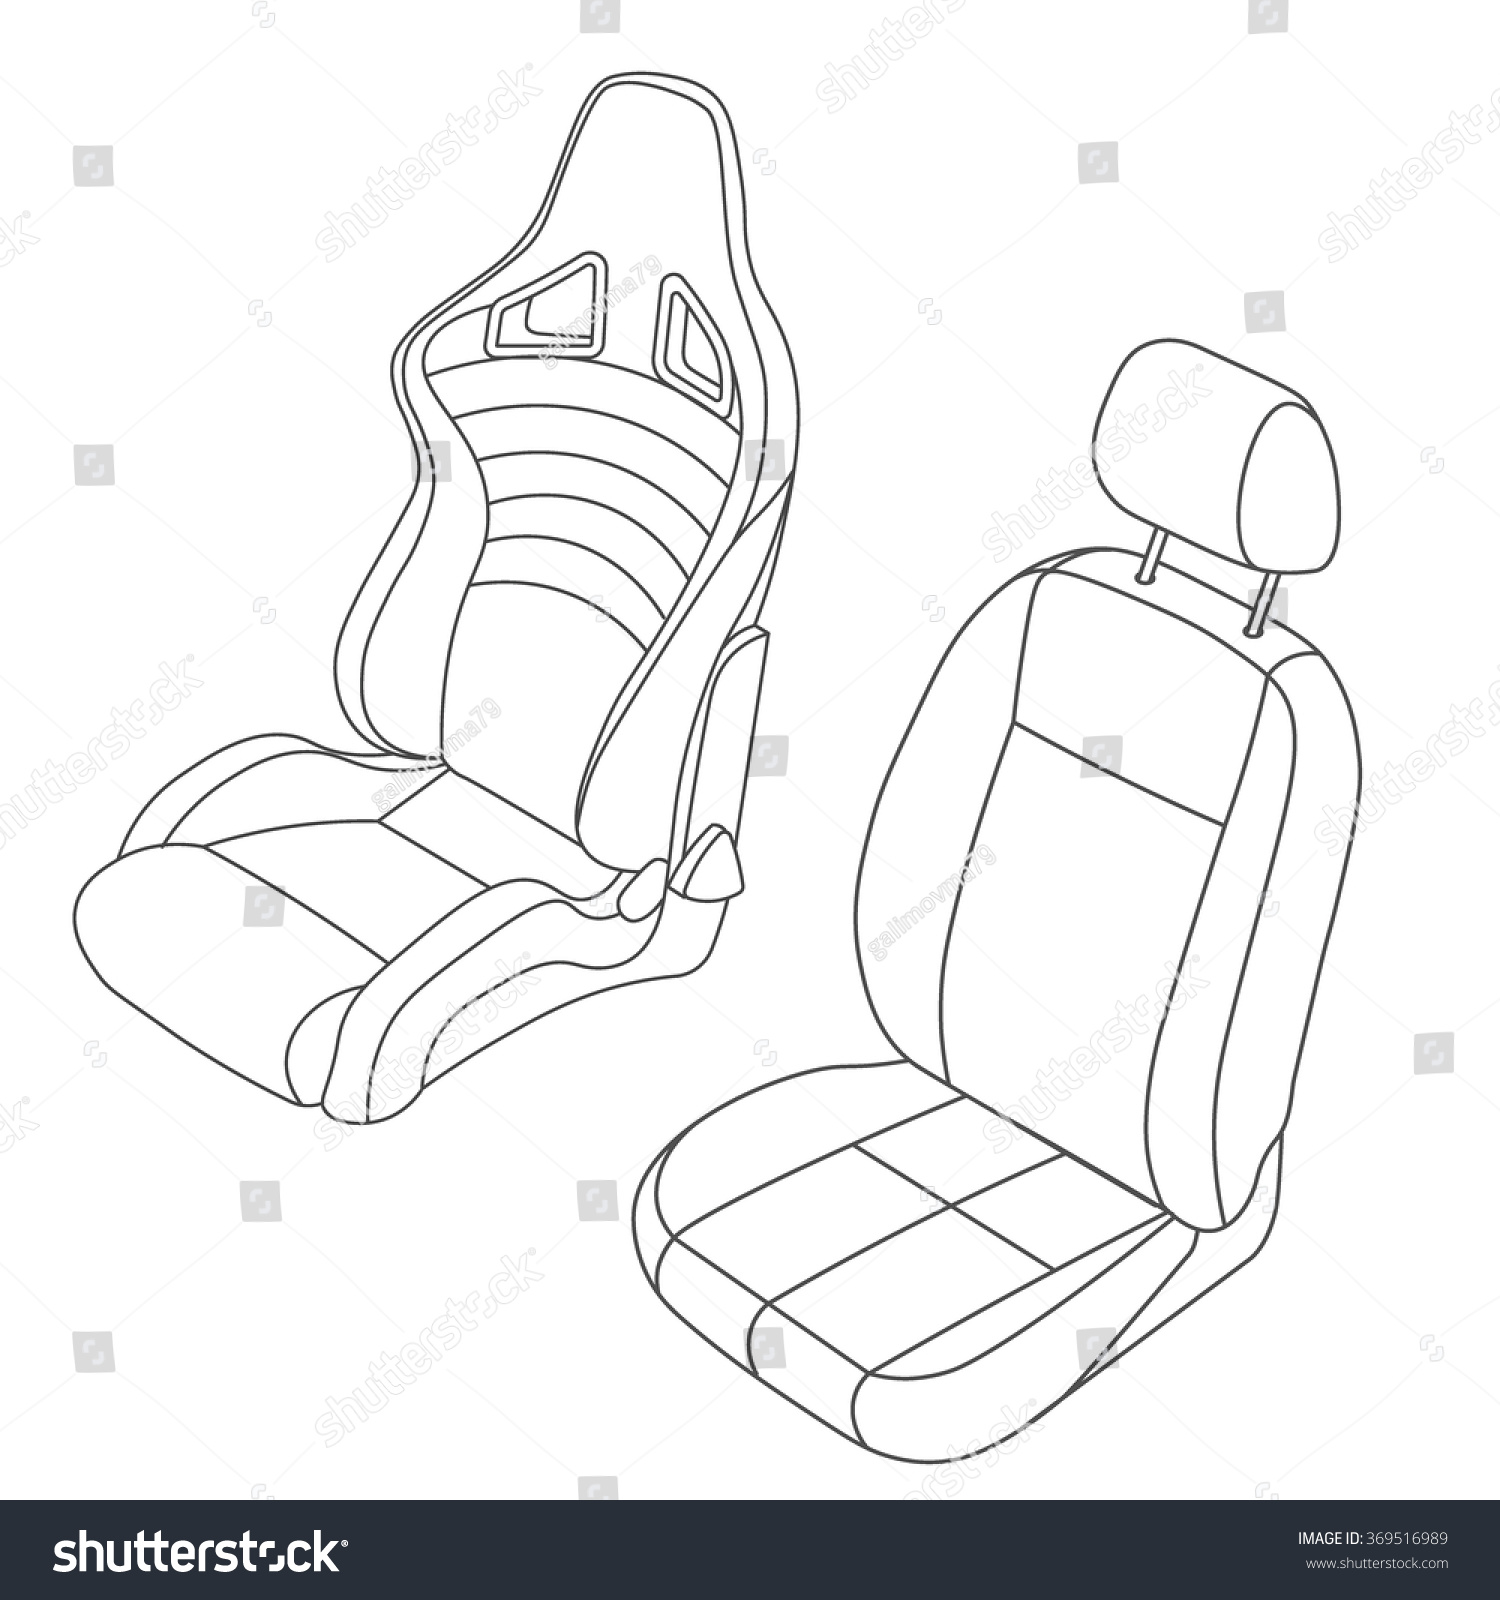 Car Seat Vector Line Drawing Set Stock Vector 369516989 Shutterstock